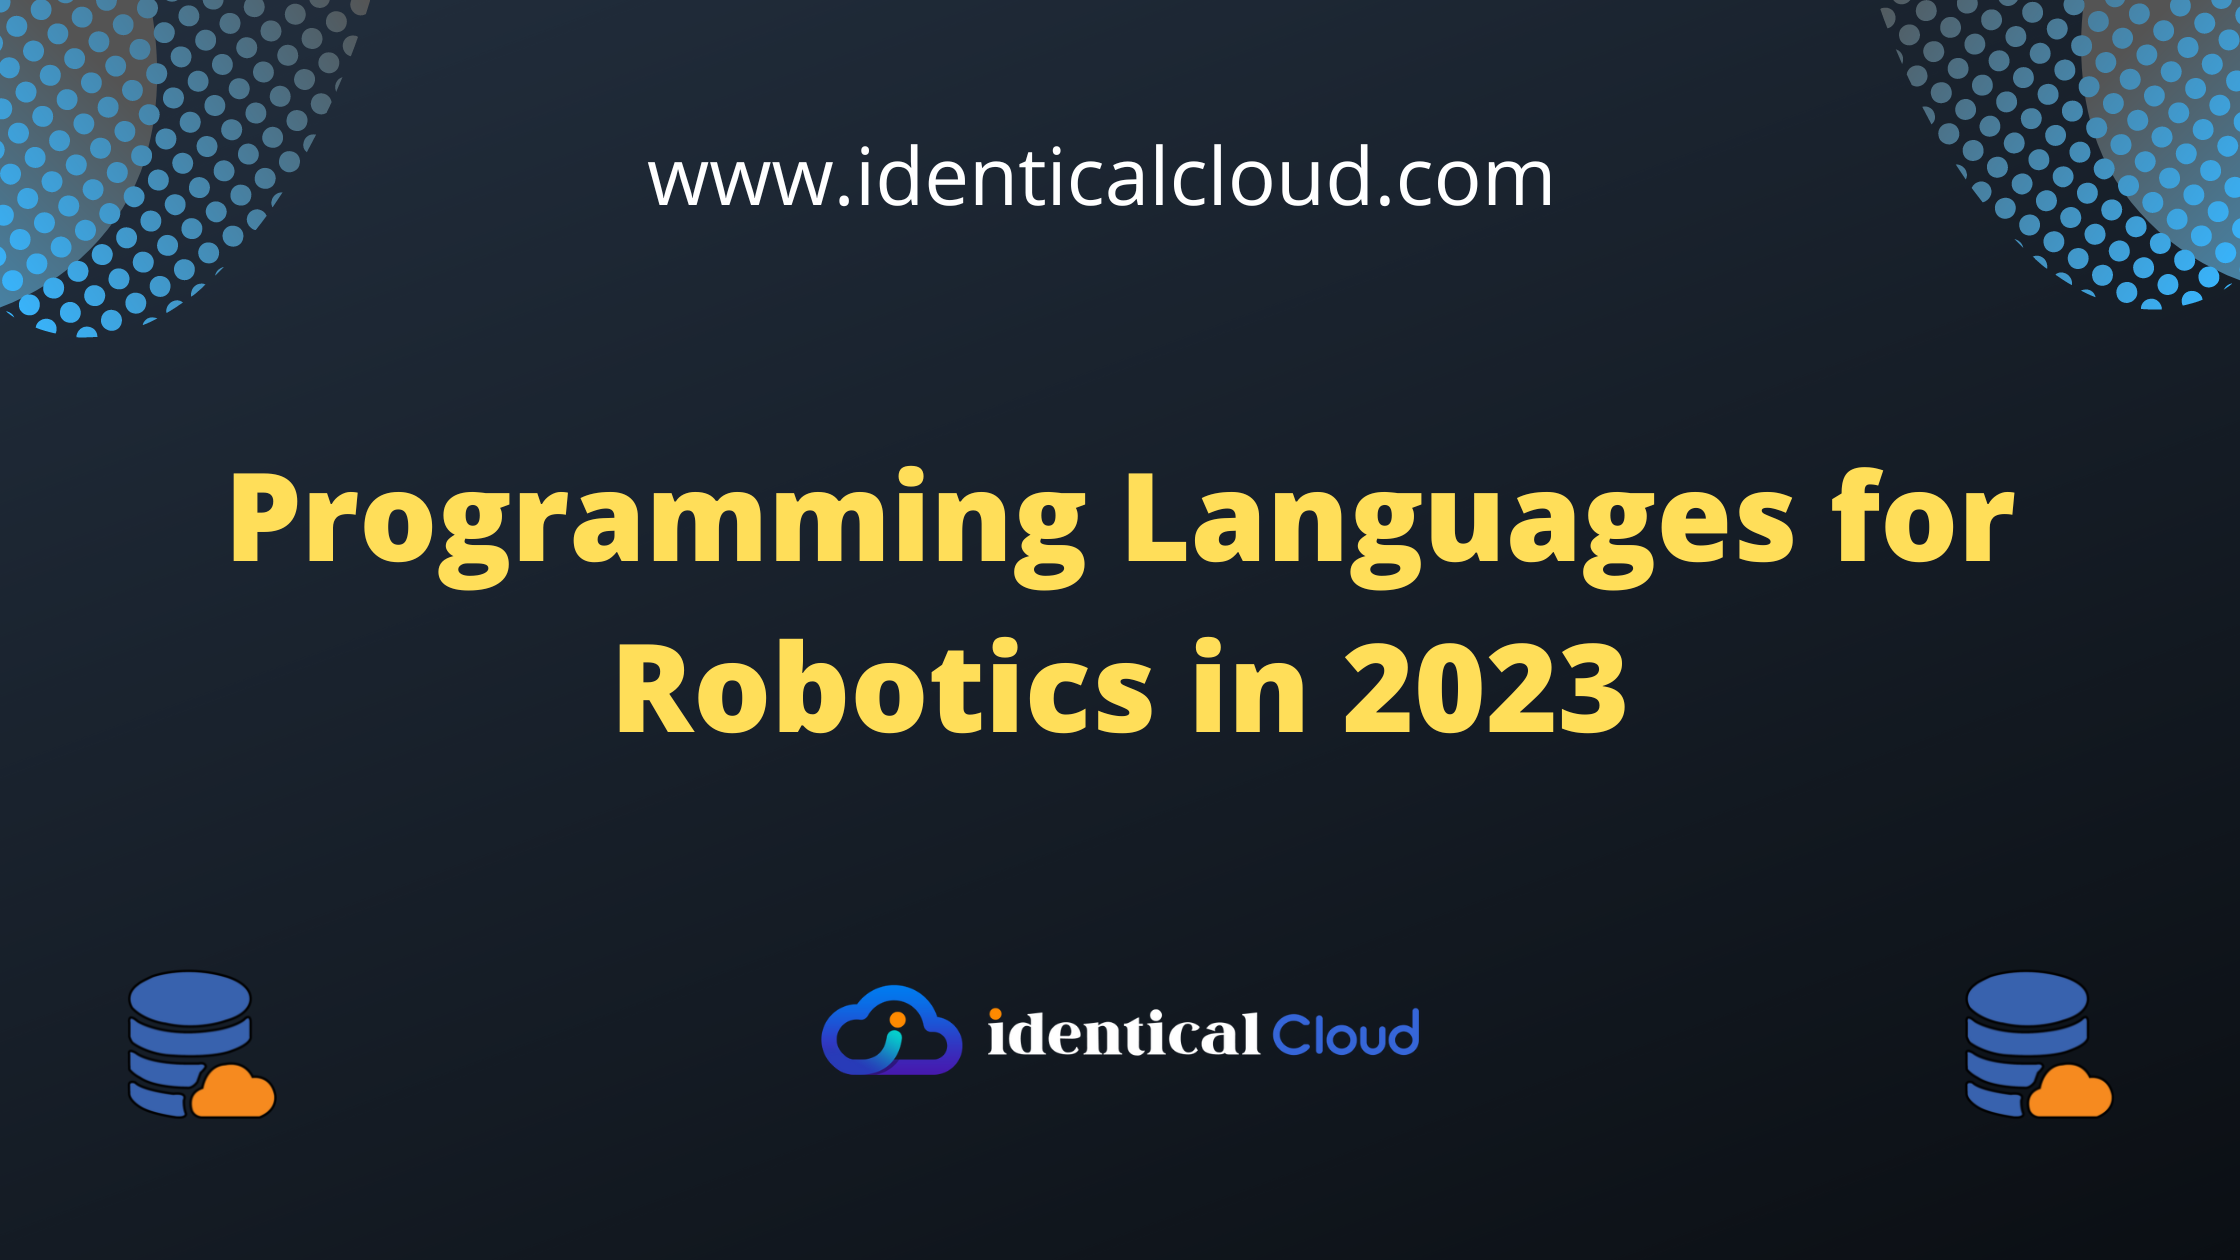 Programming Languages for Robotics in 2023 - identicalcloud.com